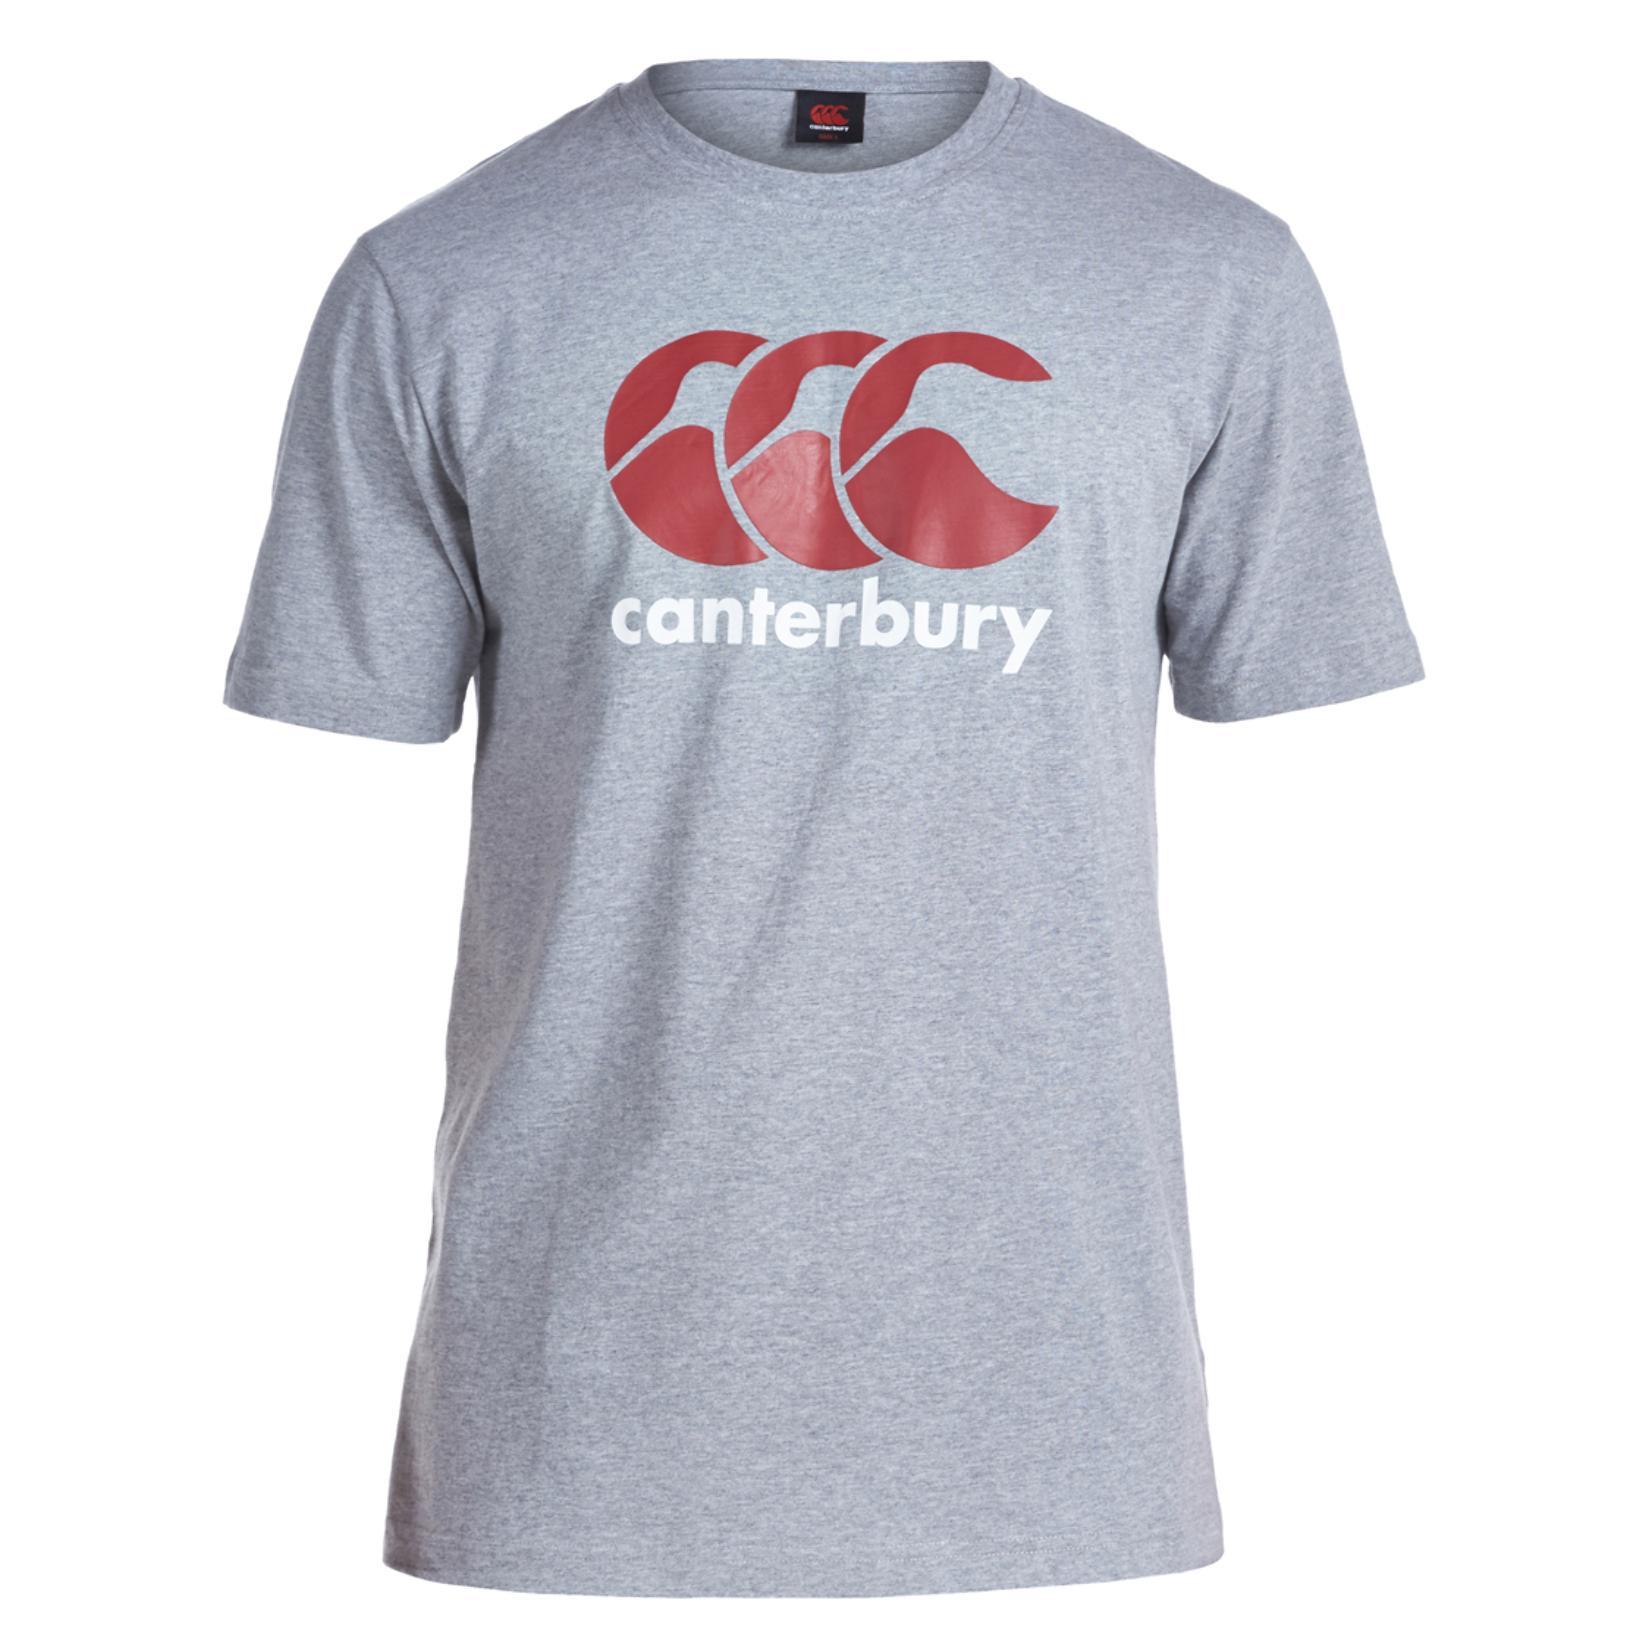 CCC Logo - Canterbury Team Ccc Logo T-shirt - Kitlocker.com